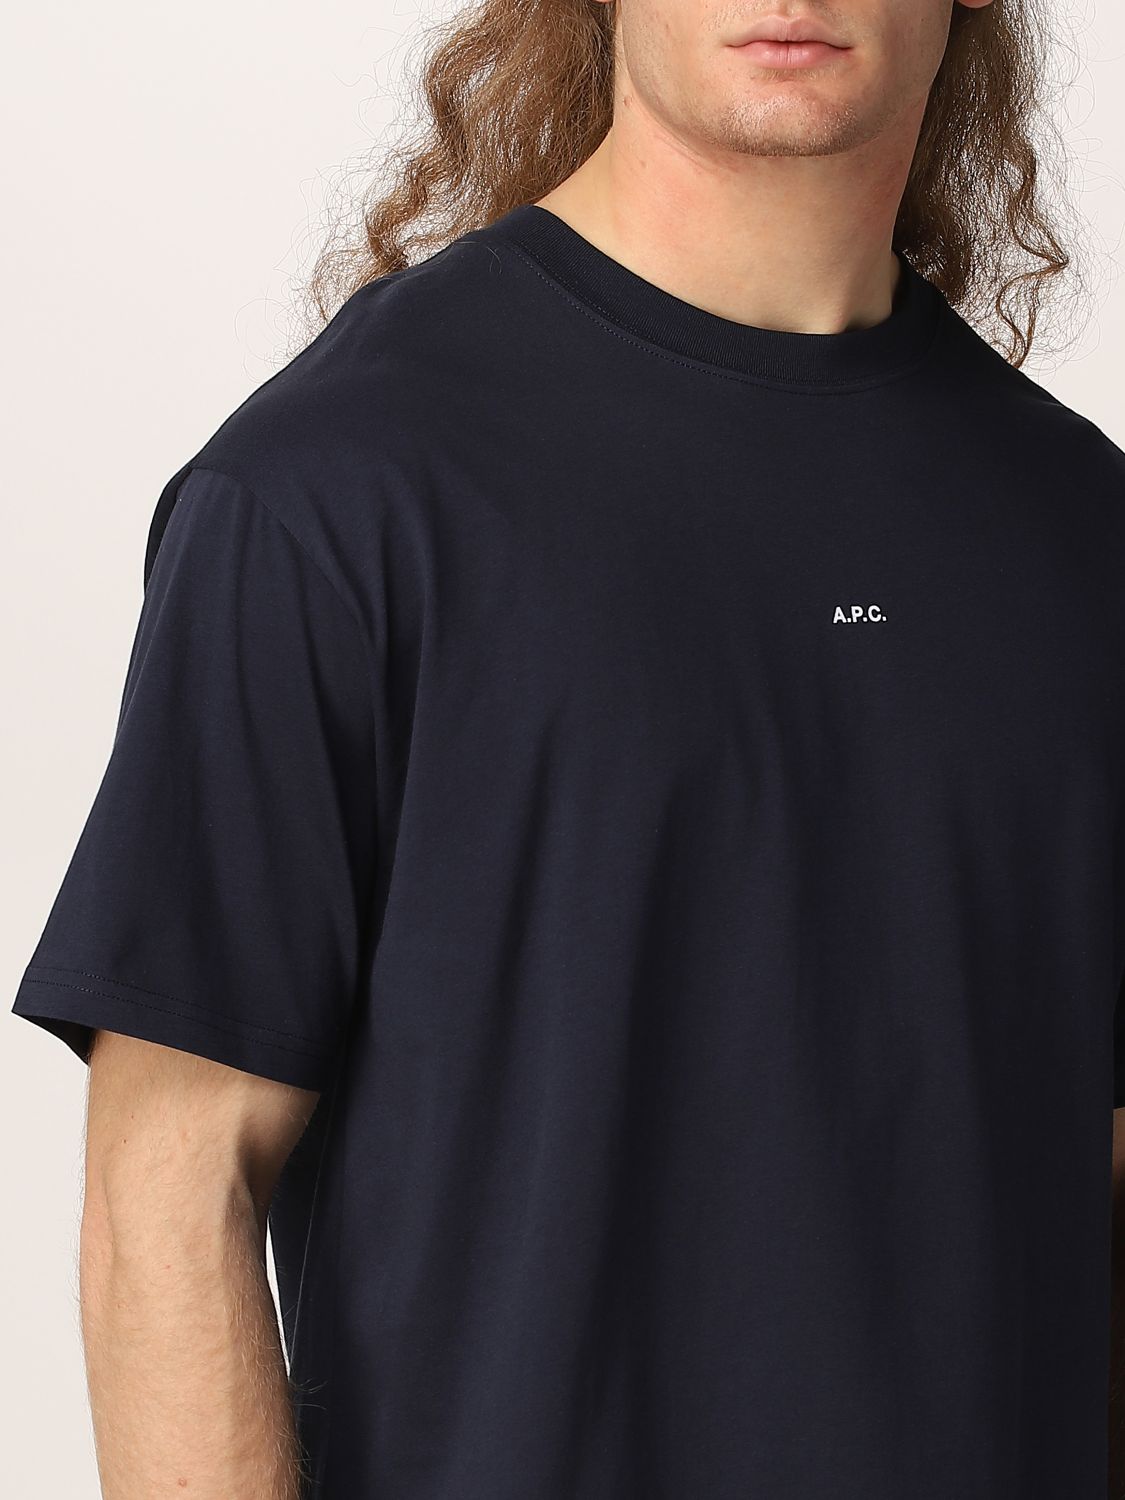 A.p.c. cotton jersey T-shirt with mini logo